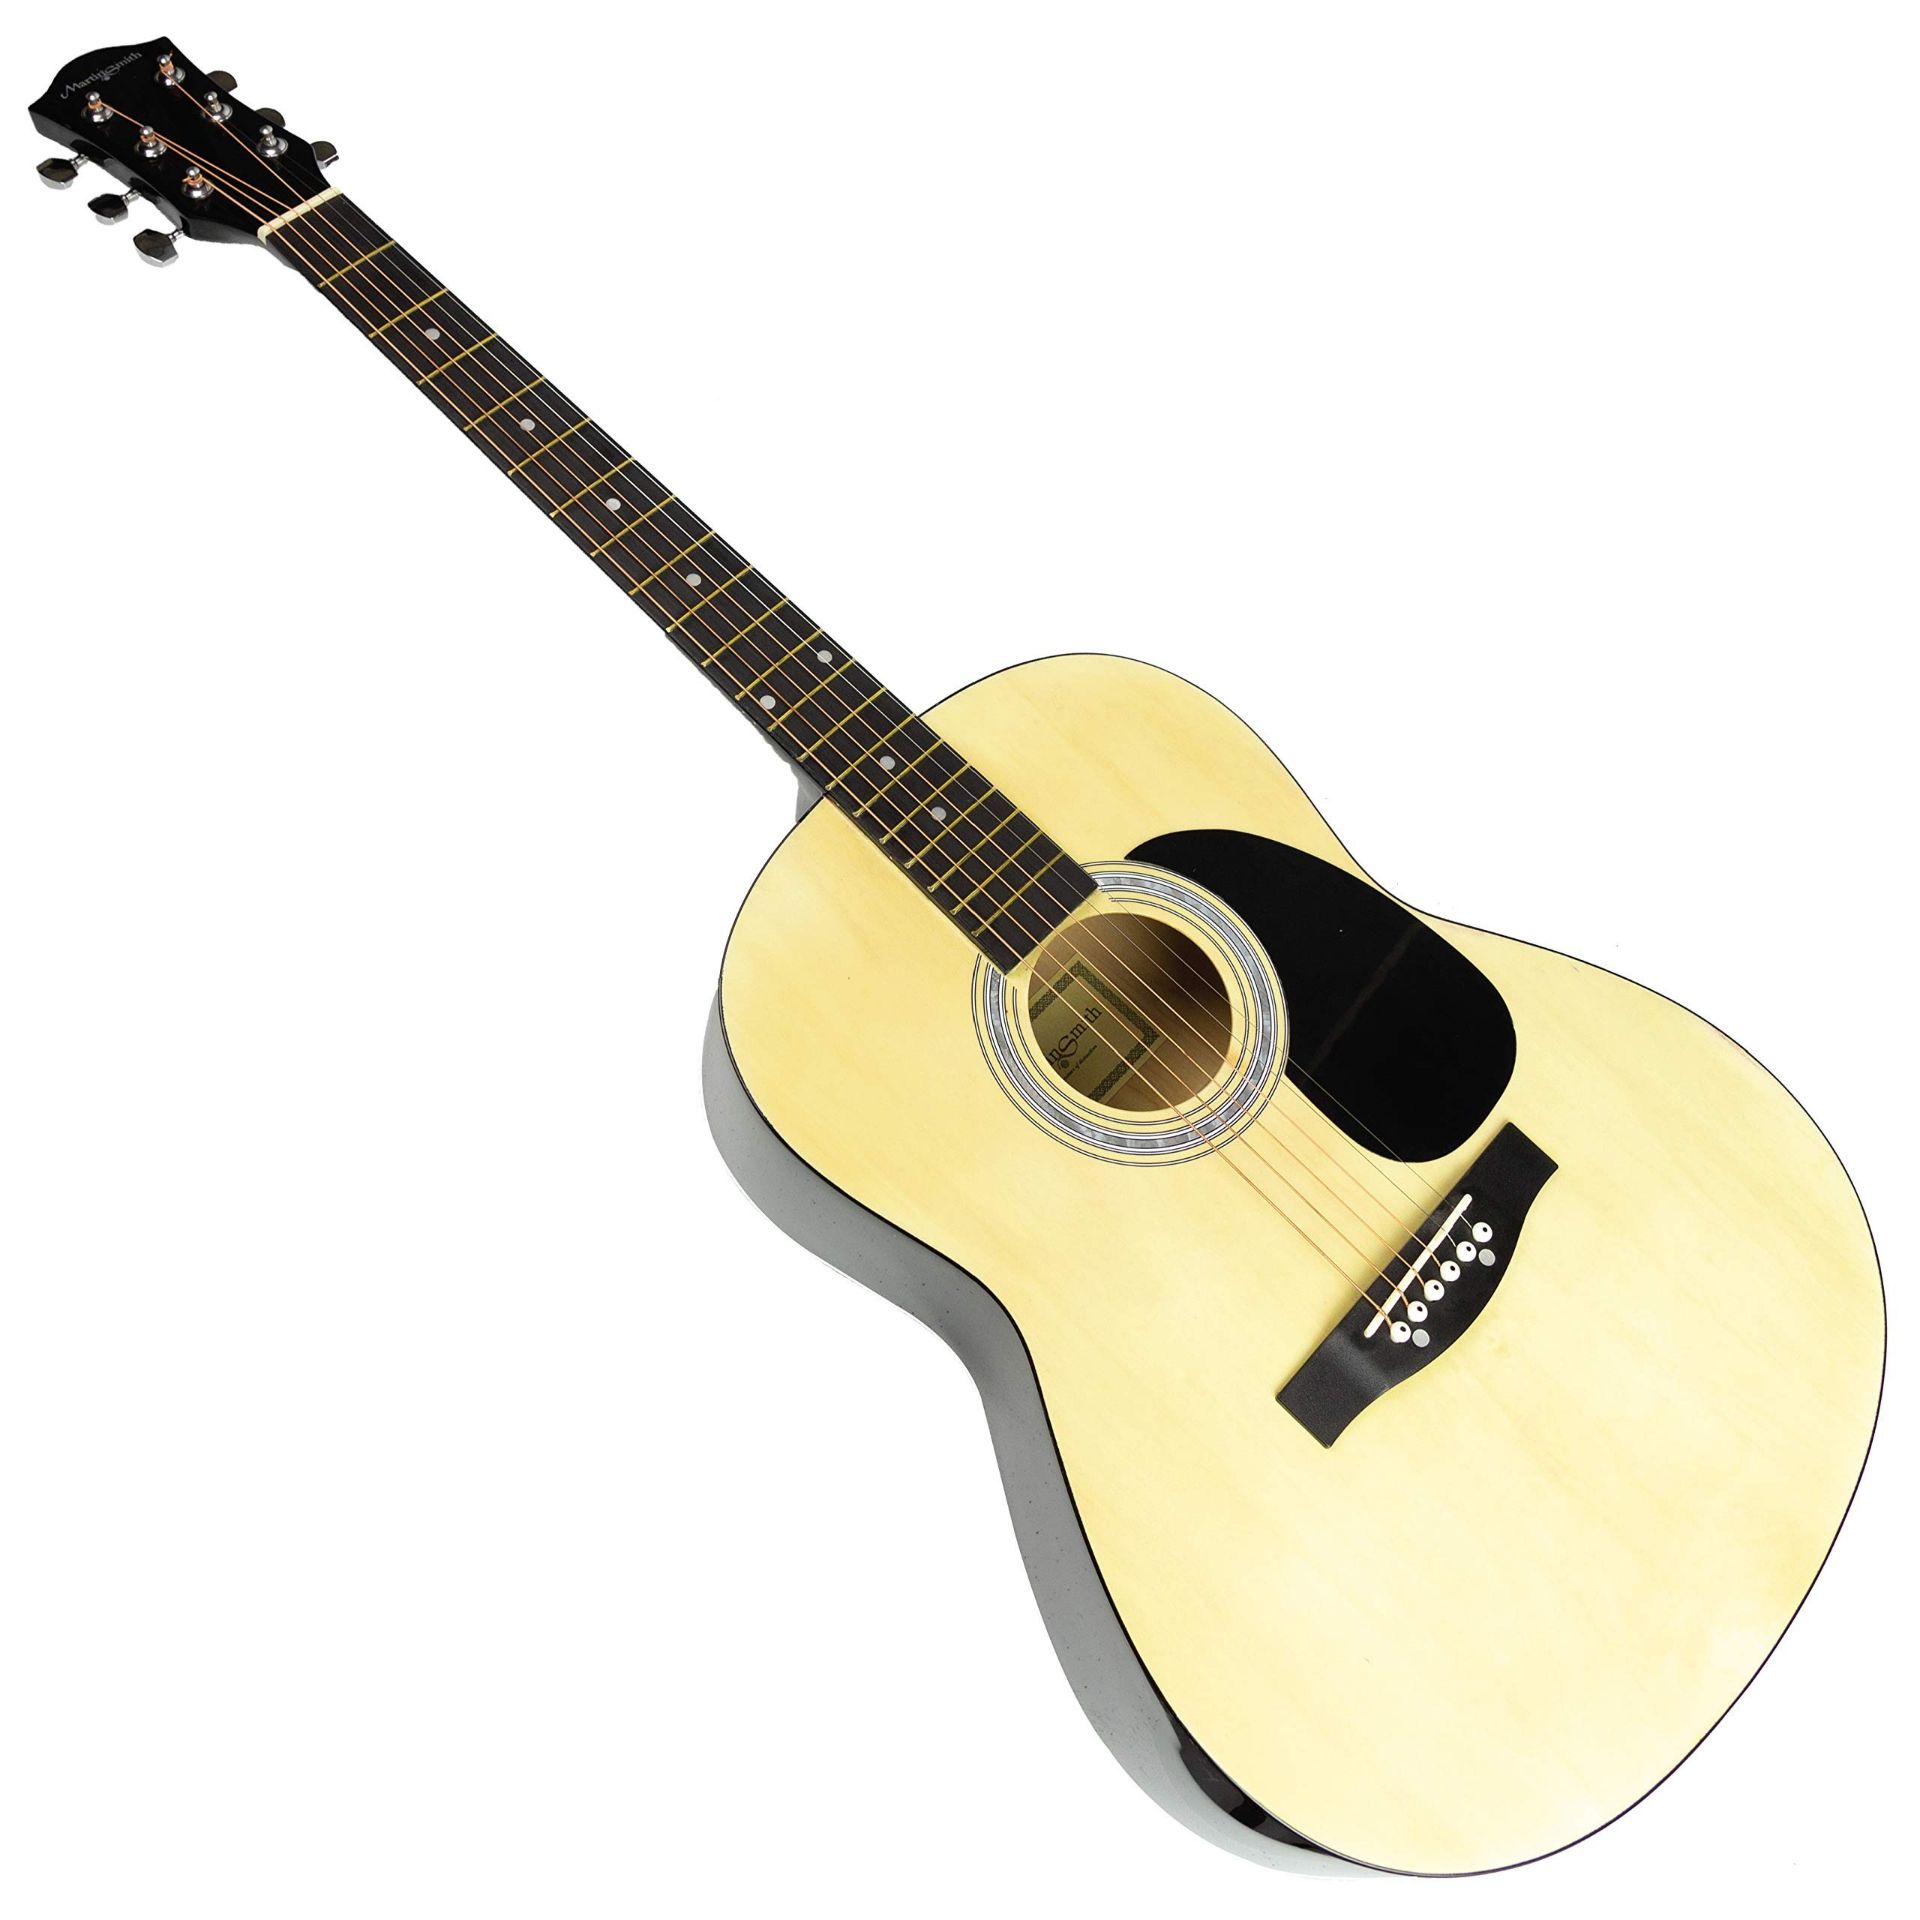 MartinSmith W-101-N-PK Acoustic Guitar - ER21